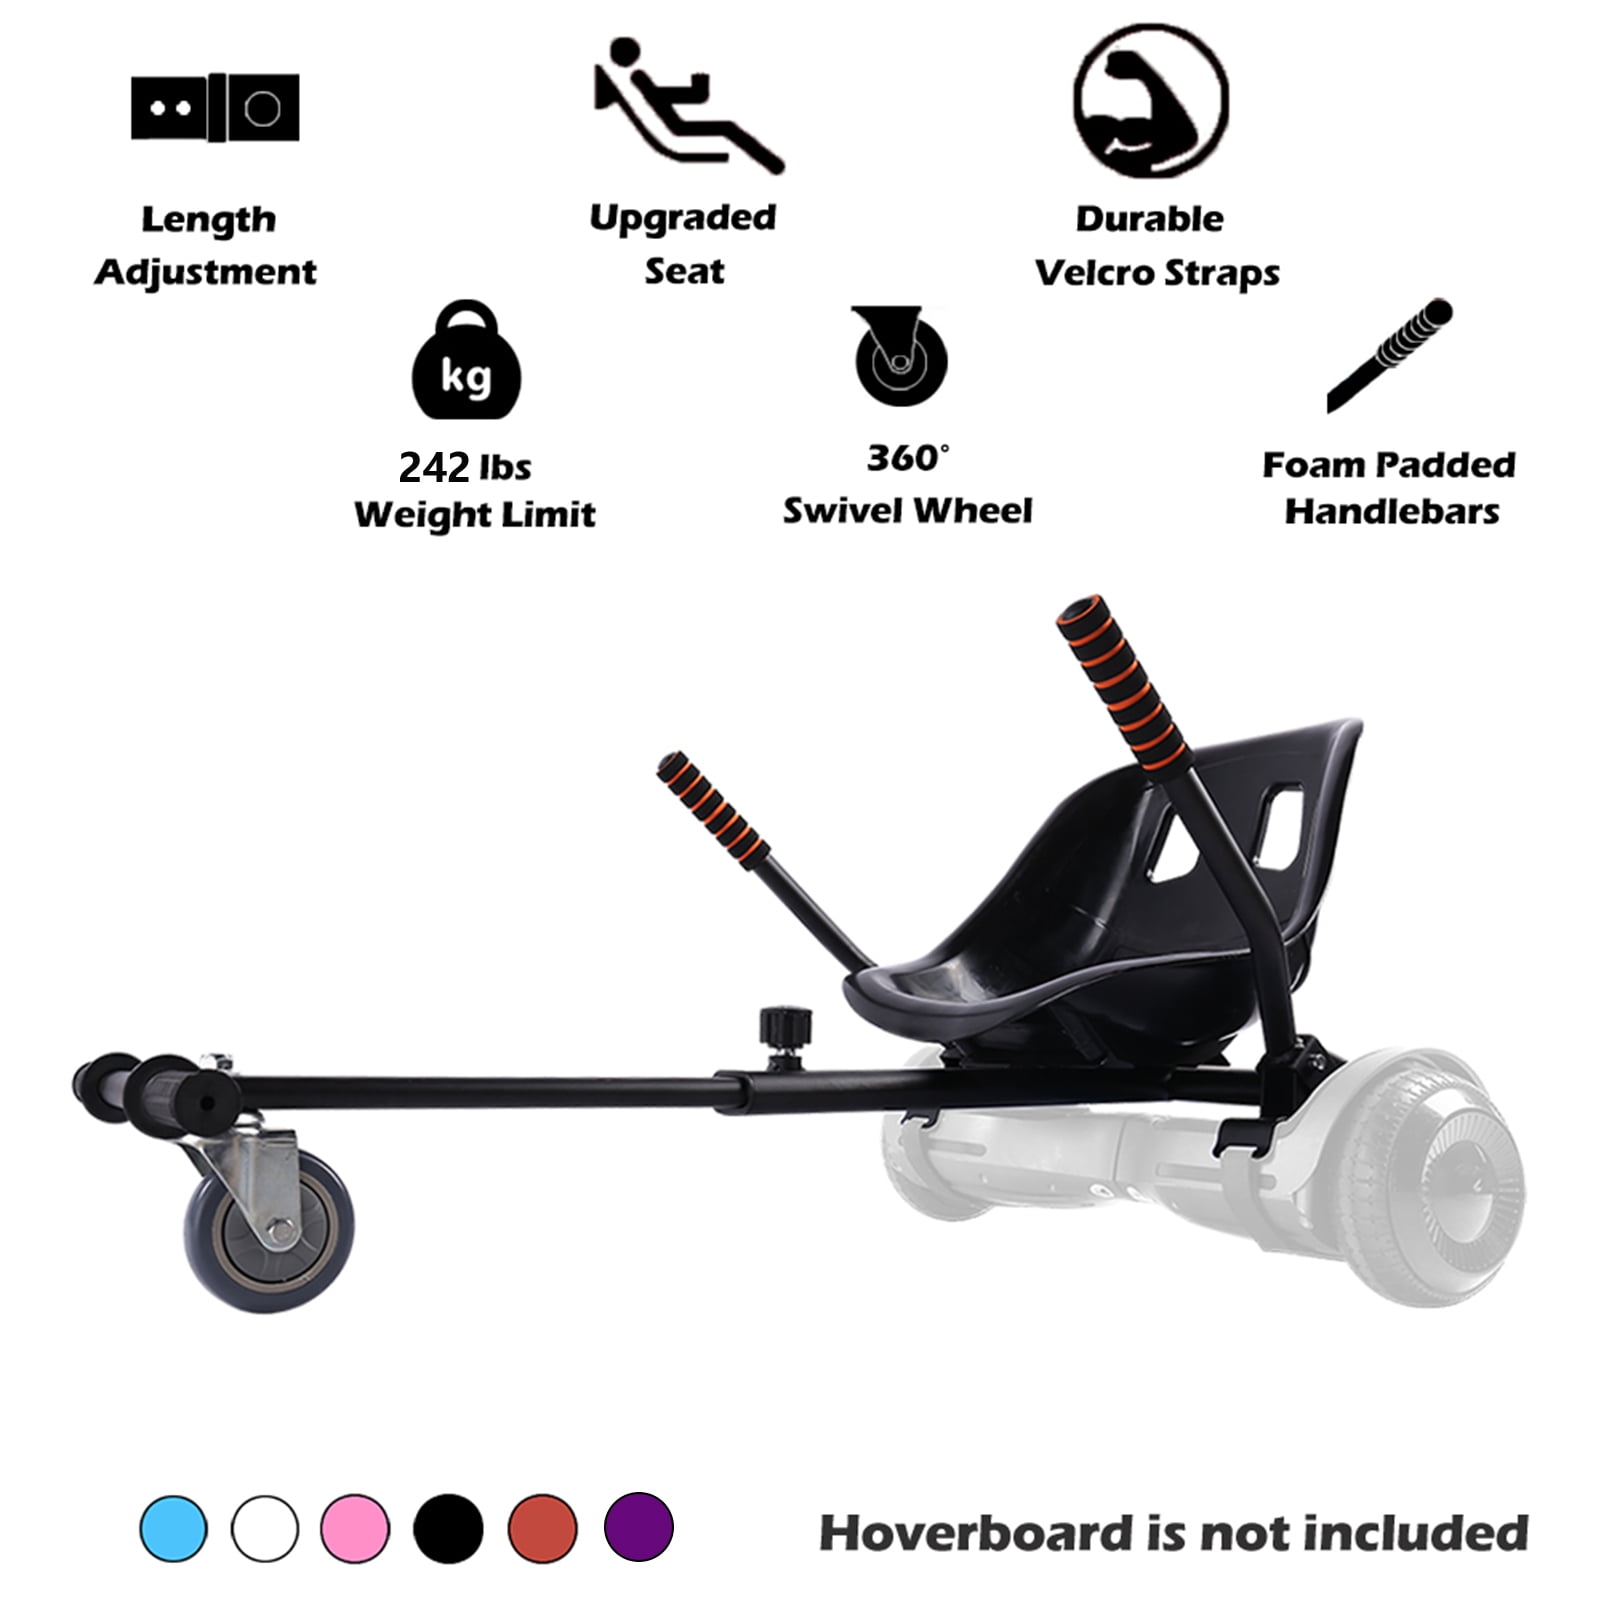 Hovercart Longueur Ajustable Hoverboard Non Inclus Adapté Tous Les Hoverboards 6,5 Scooter Conversion Go-Kart 2WD Hoverkart pour Hoverboard 8  8,5  et 10 Hip